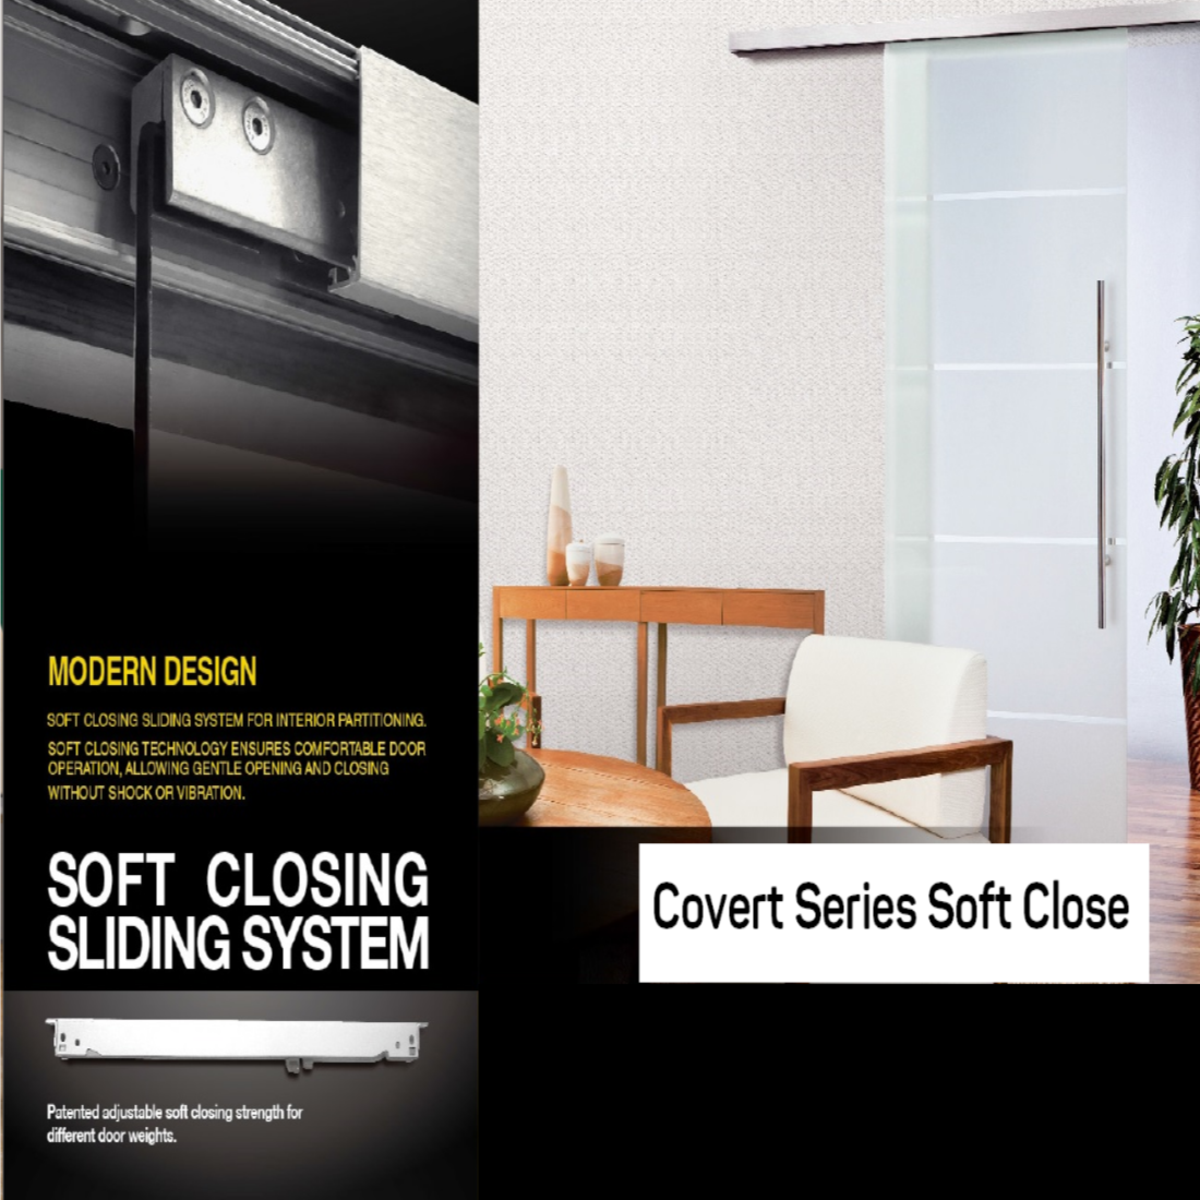 Covert Series Soft Close Sliding System